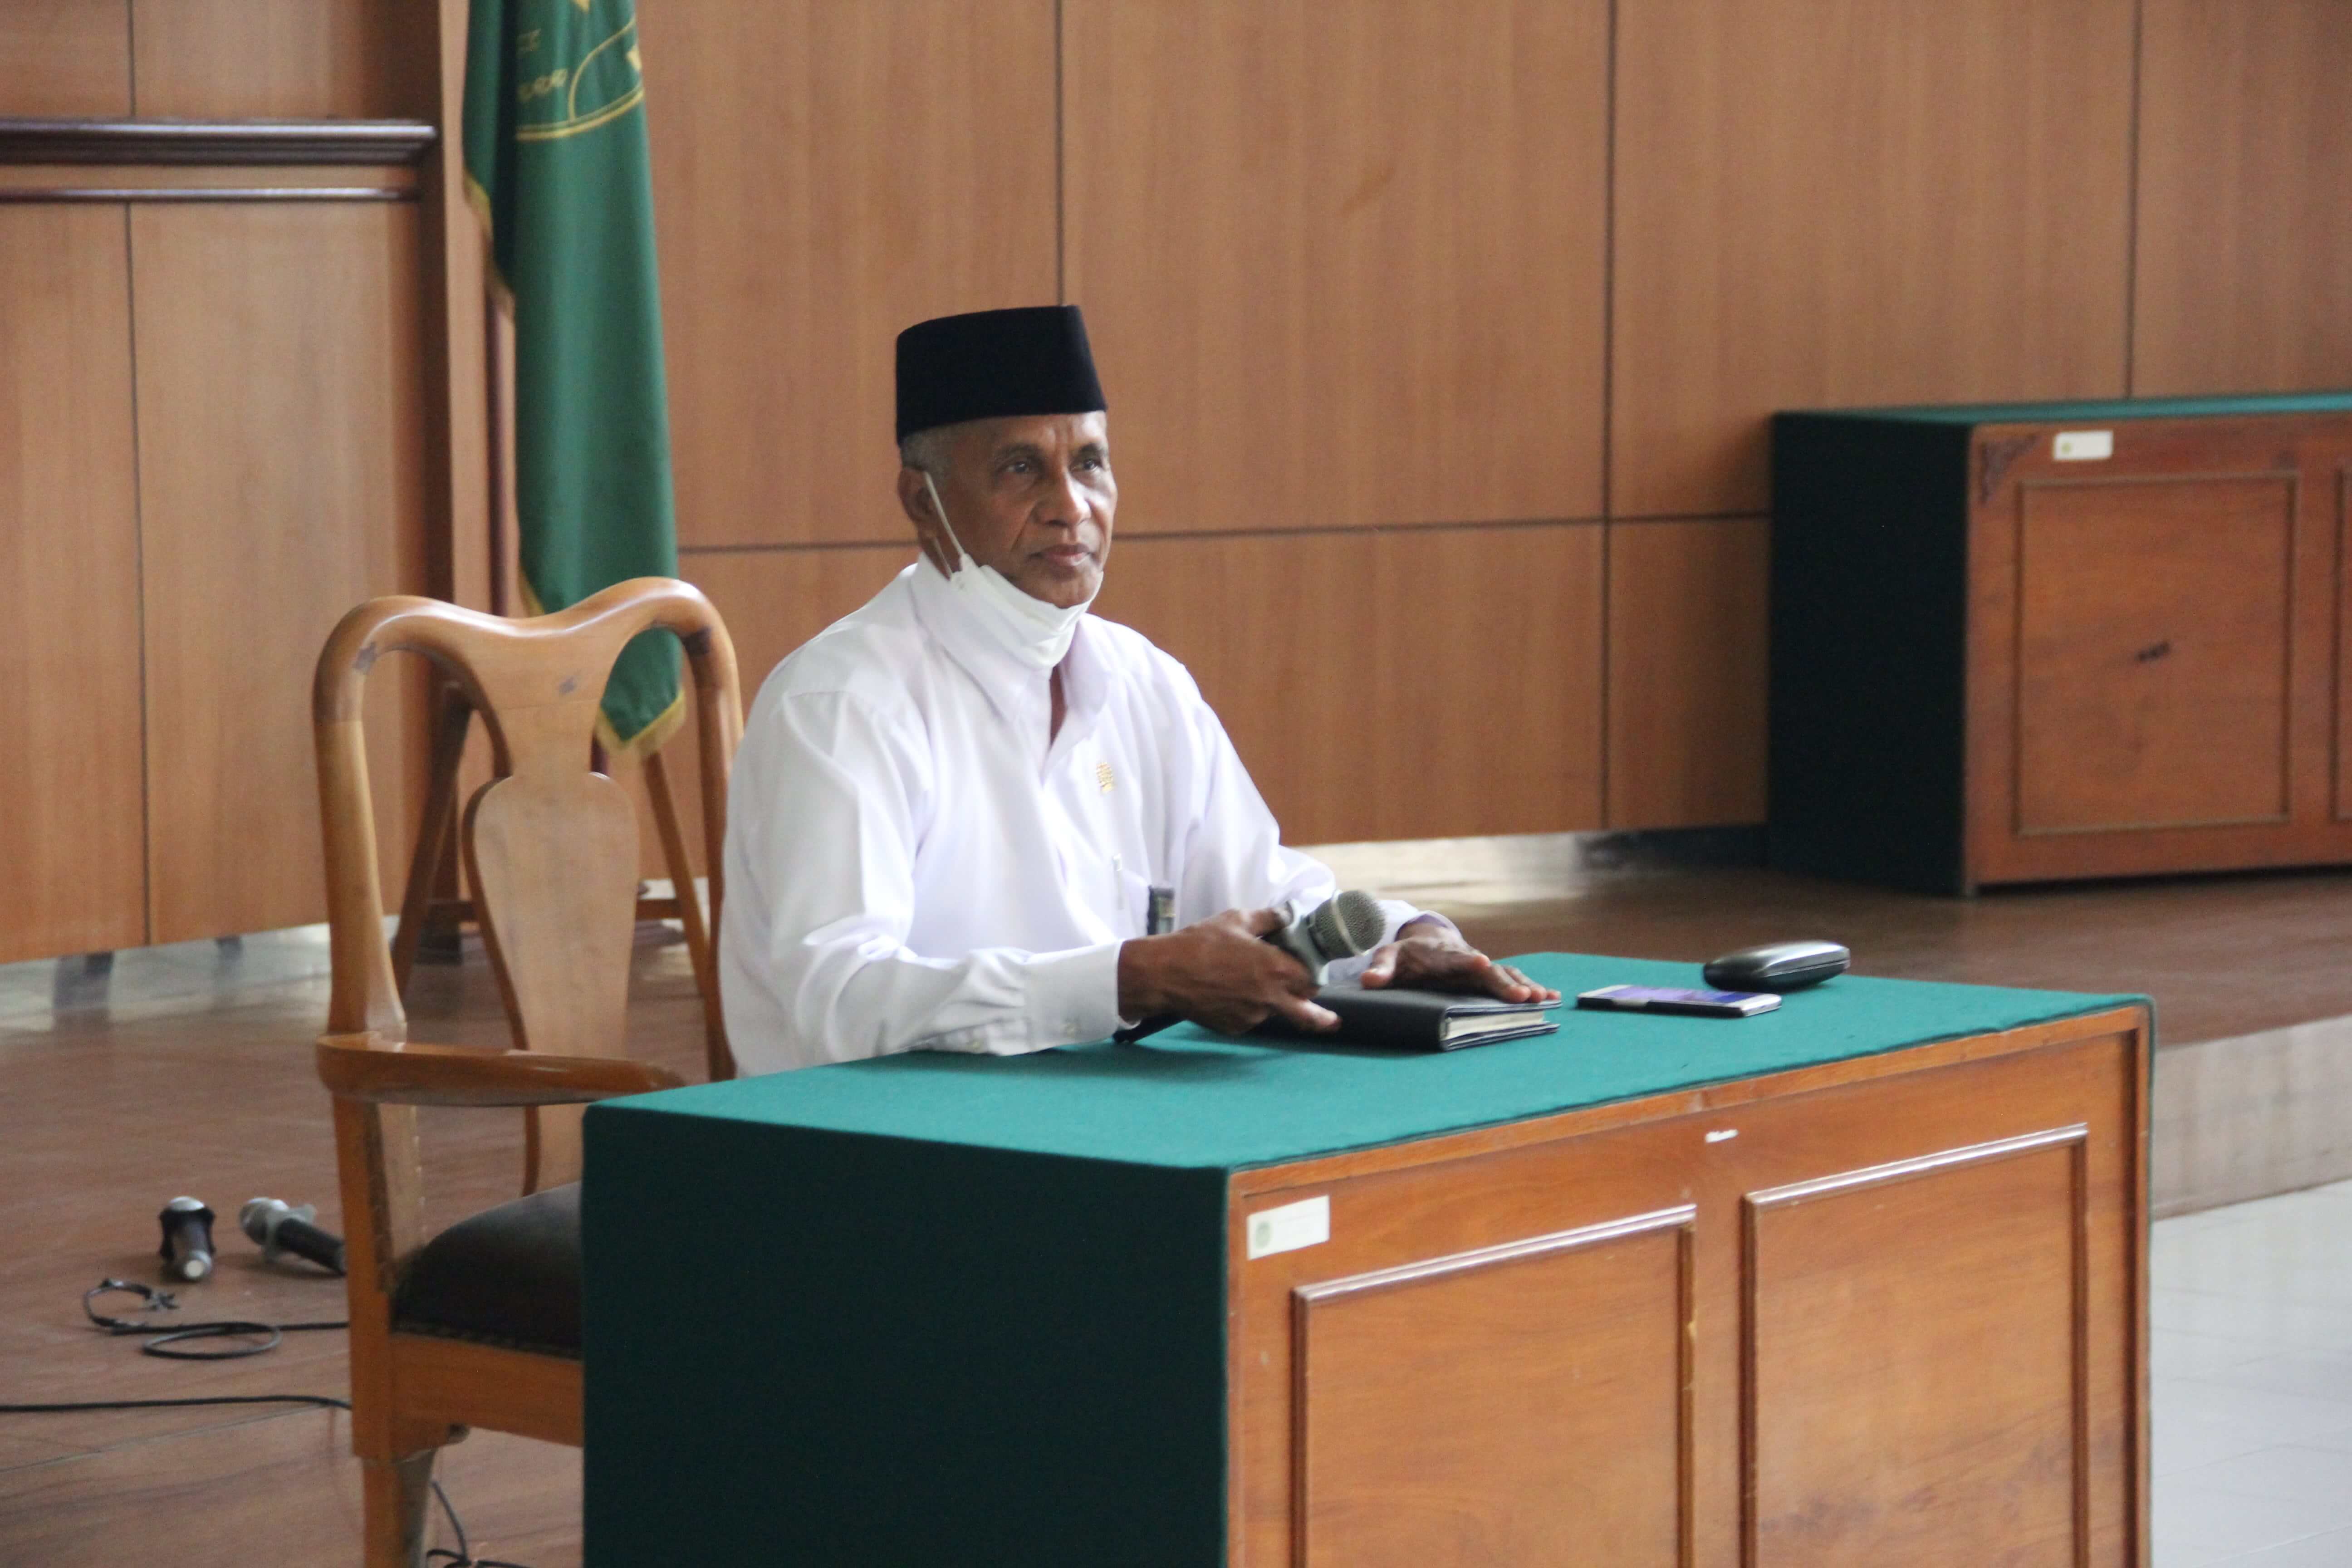 Rapat Monitoring dan Evaluasi tugas Panitera Pengganti, Jurusita dan Jurusita Pengganti Pengadilan Negeri Yogyakarta